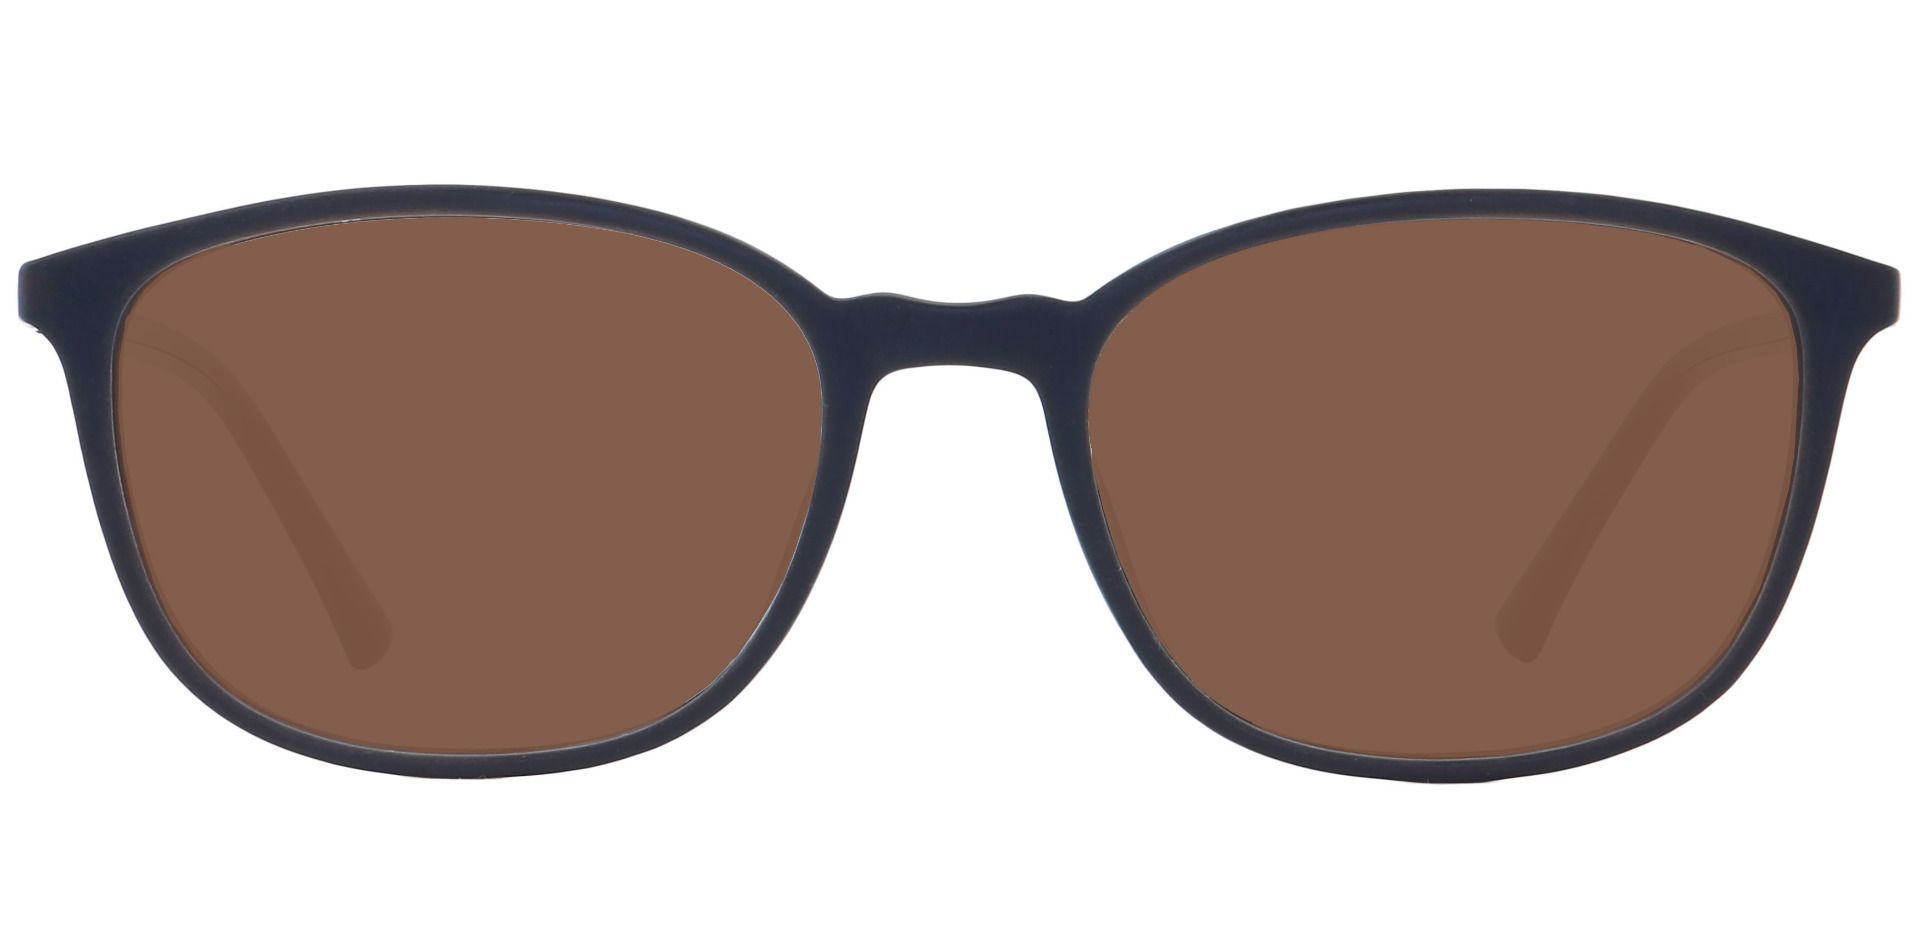 Karleen Oval Prescription Sunglasses - Brown Frame With Brown Lenses